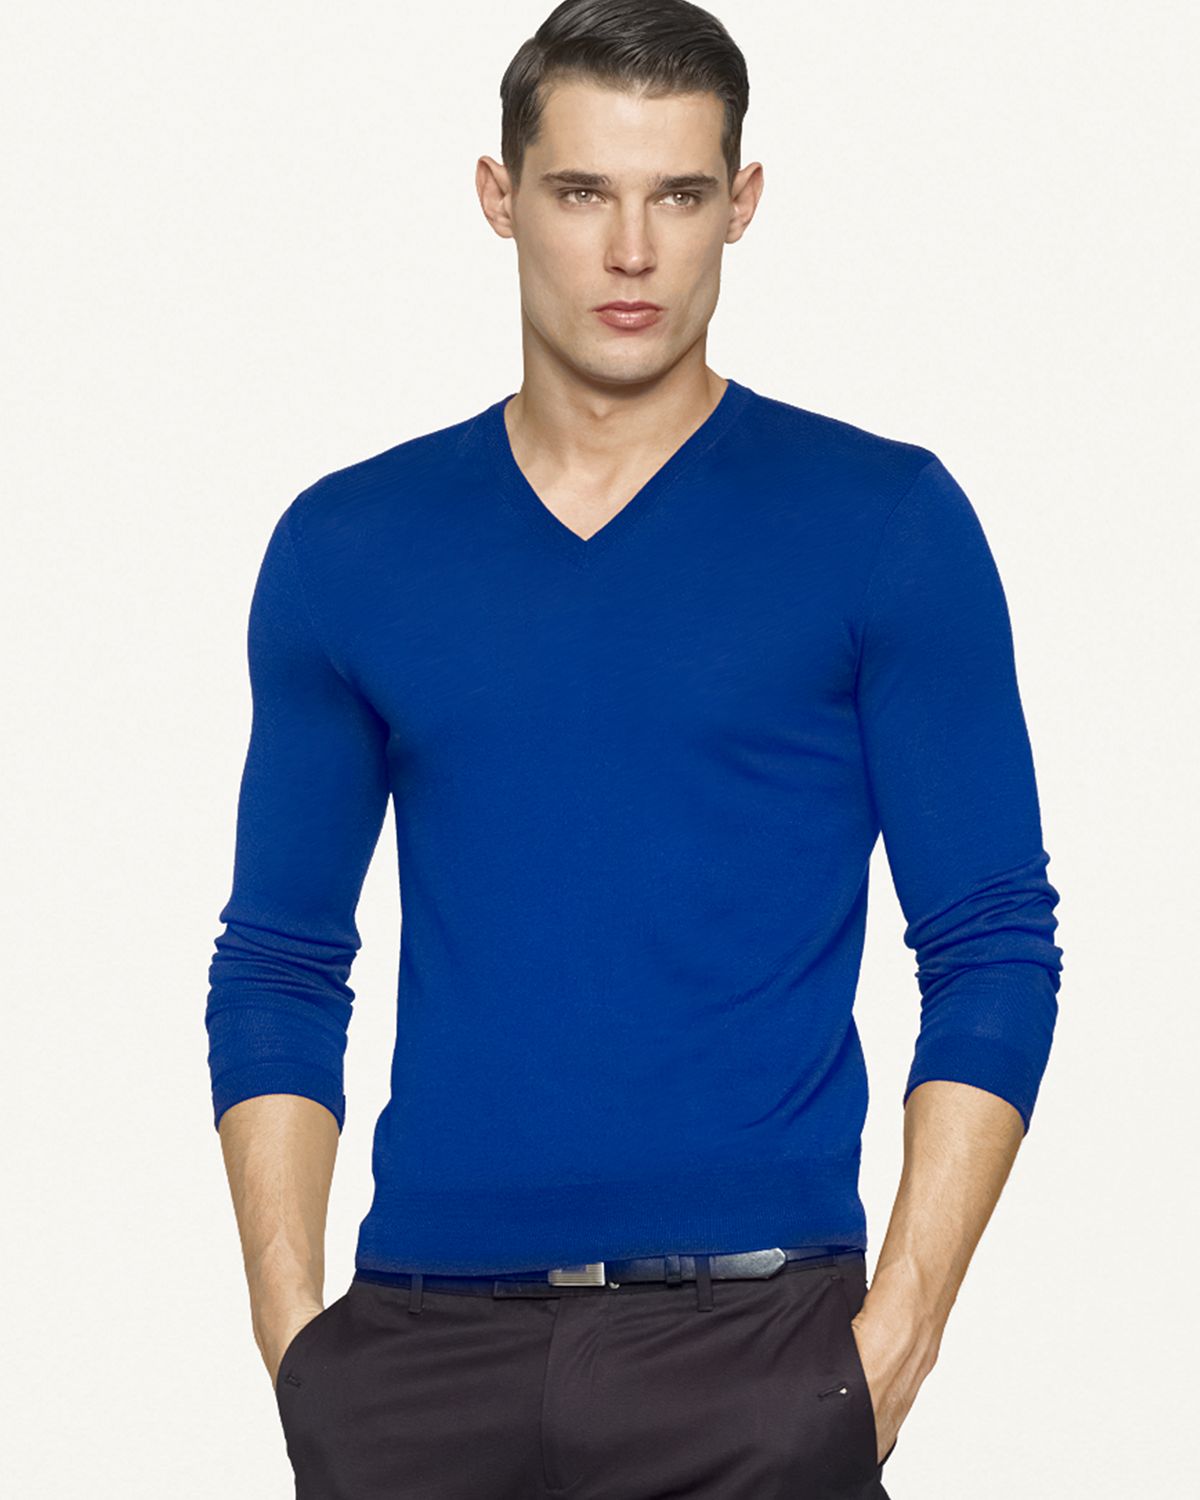 Lyst - Ralph Lauren Black Label Woolcashmere Vneck Sweater in Blue for Men